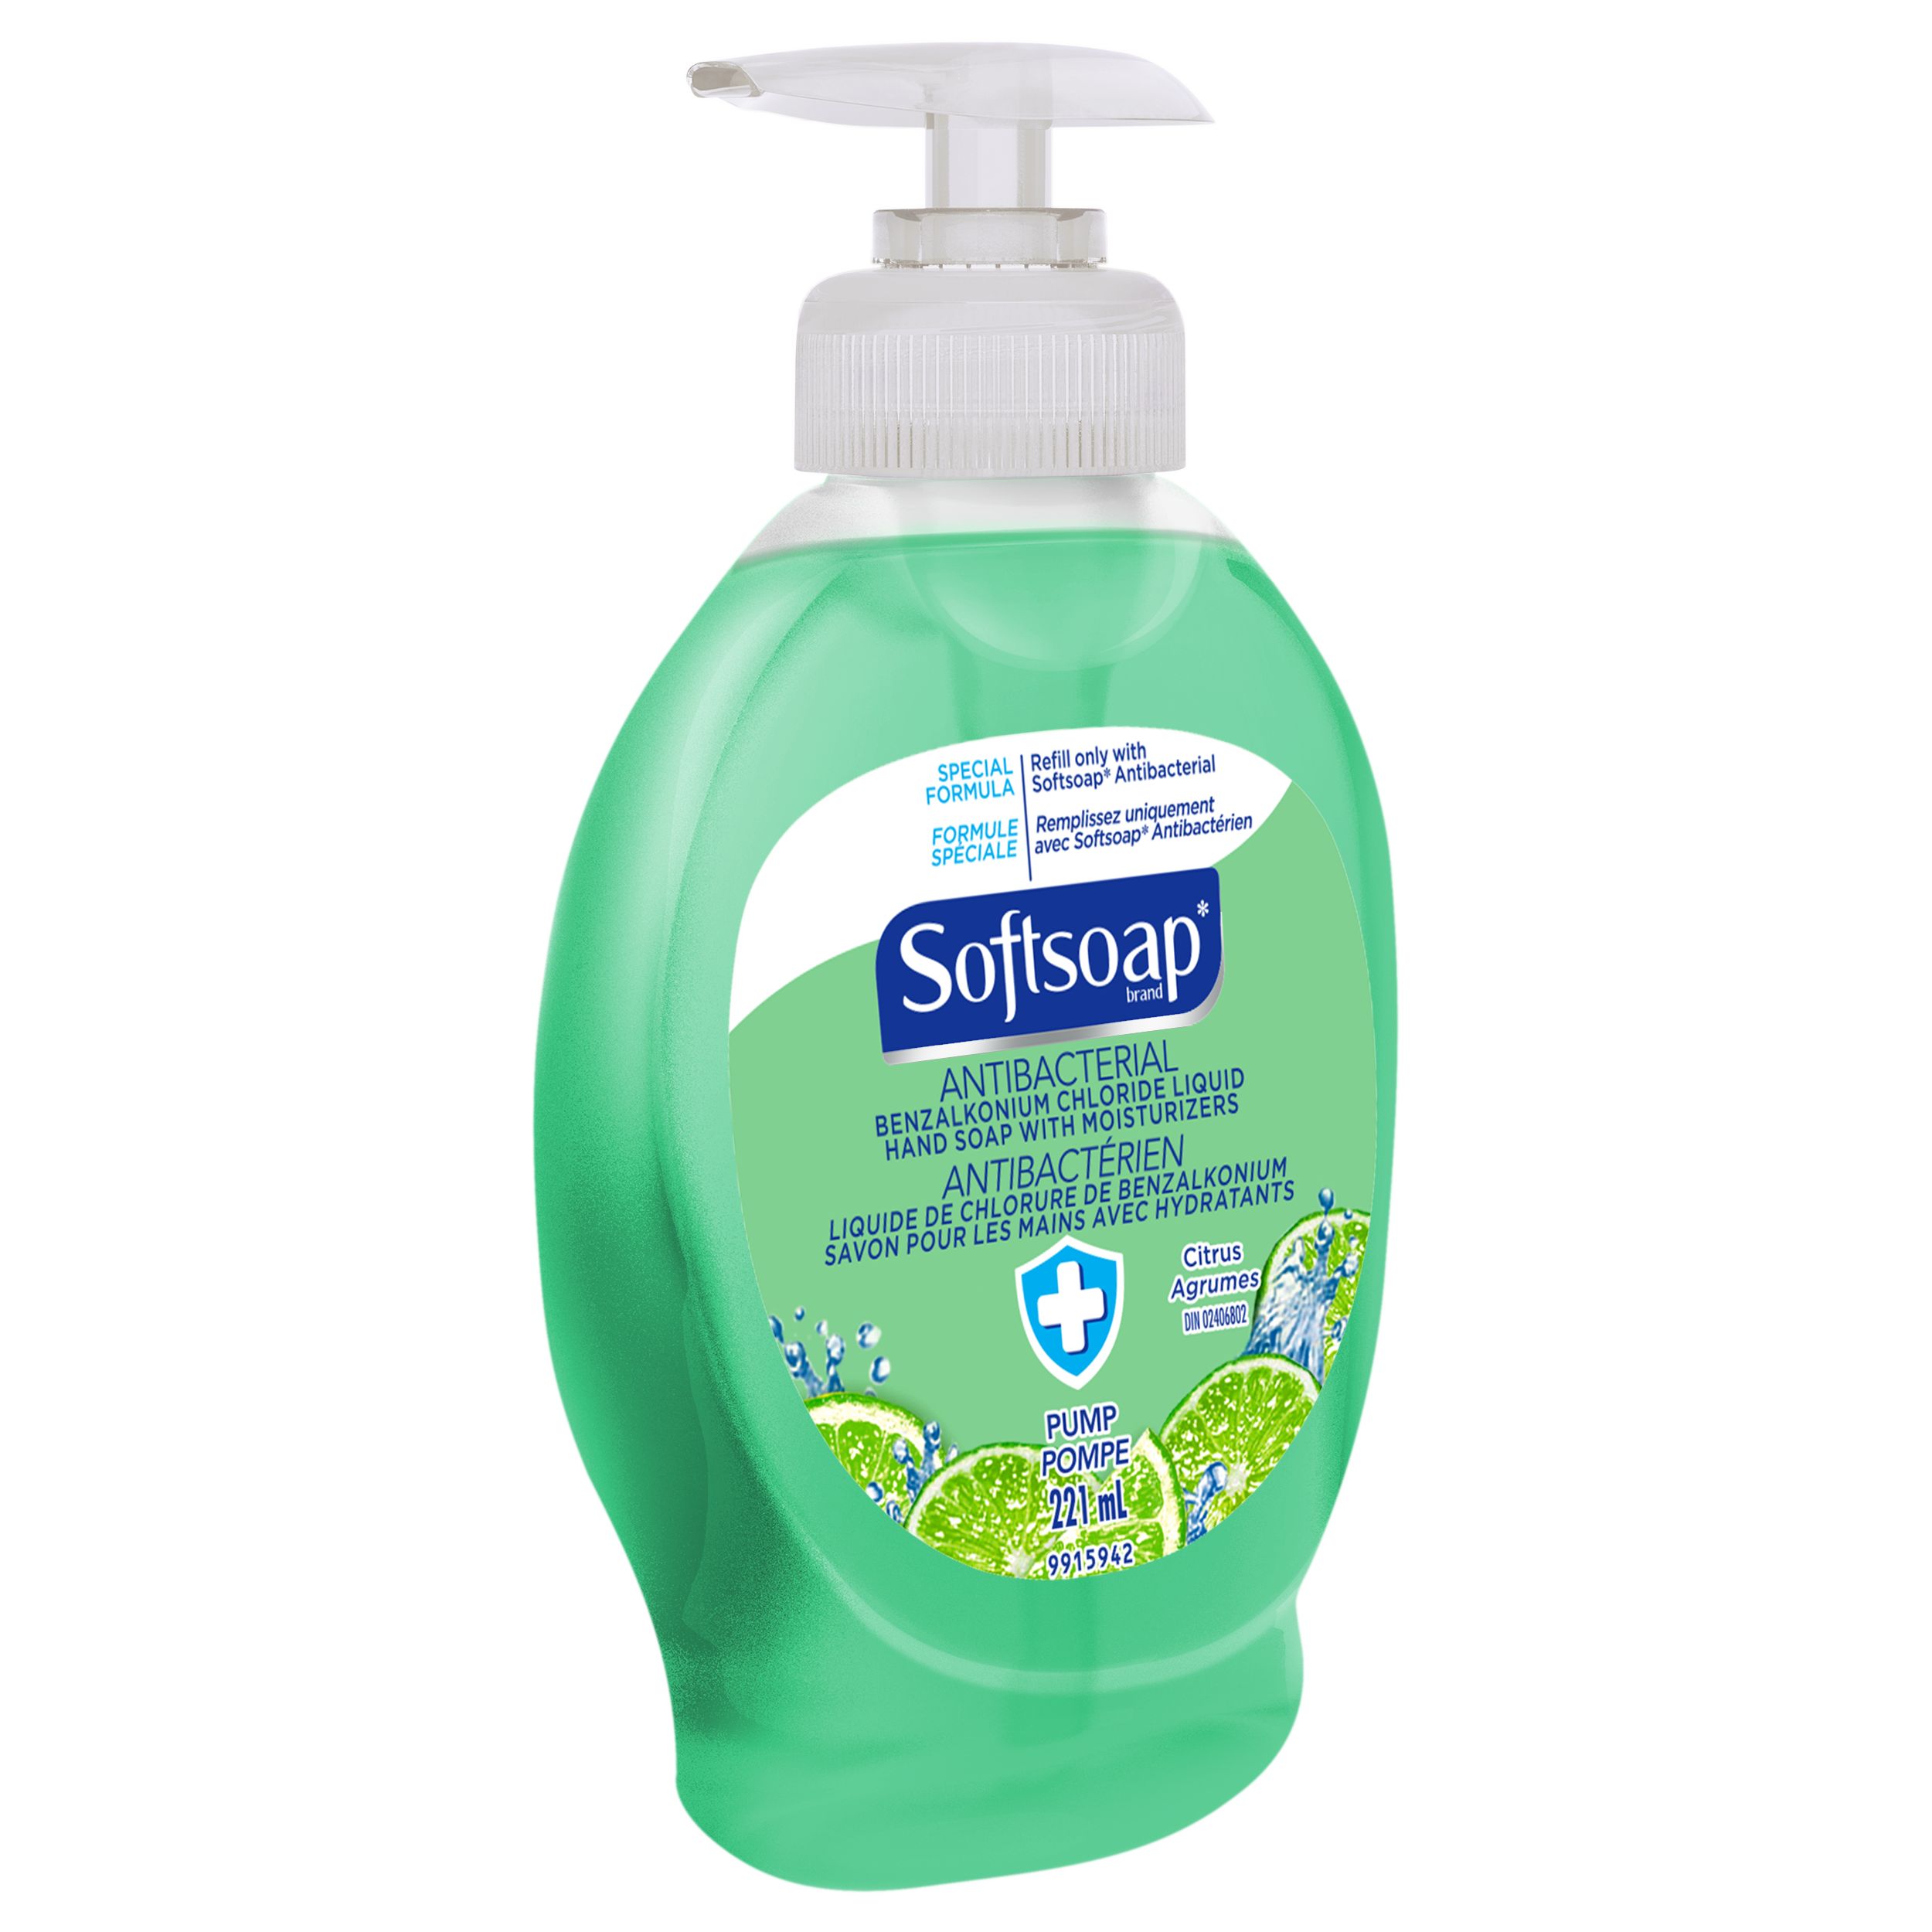 LAVA Liquid Hand Soap With Moisturizers 7.5 oz Pump Dispenser